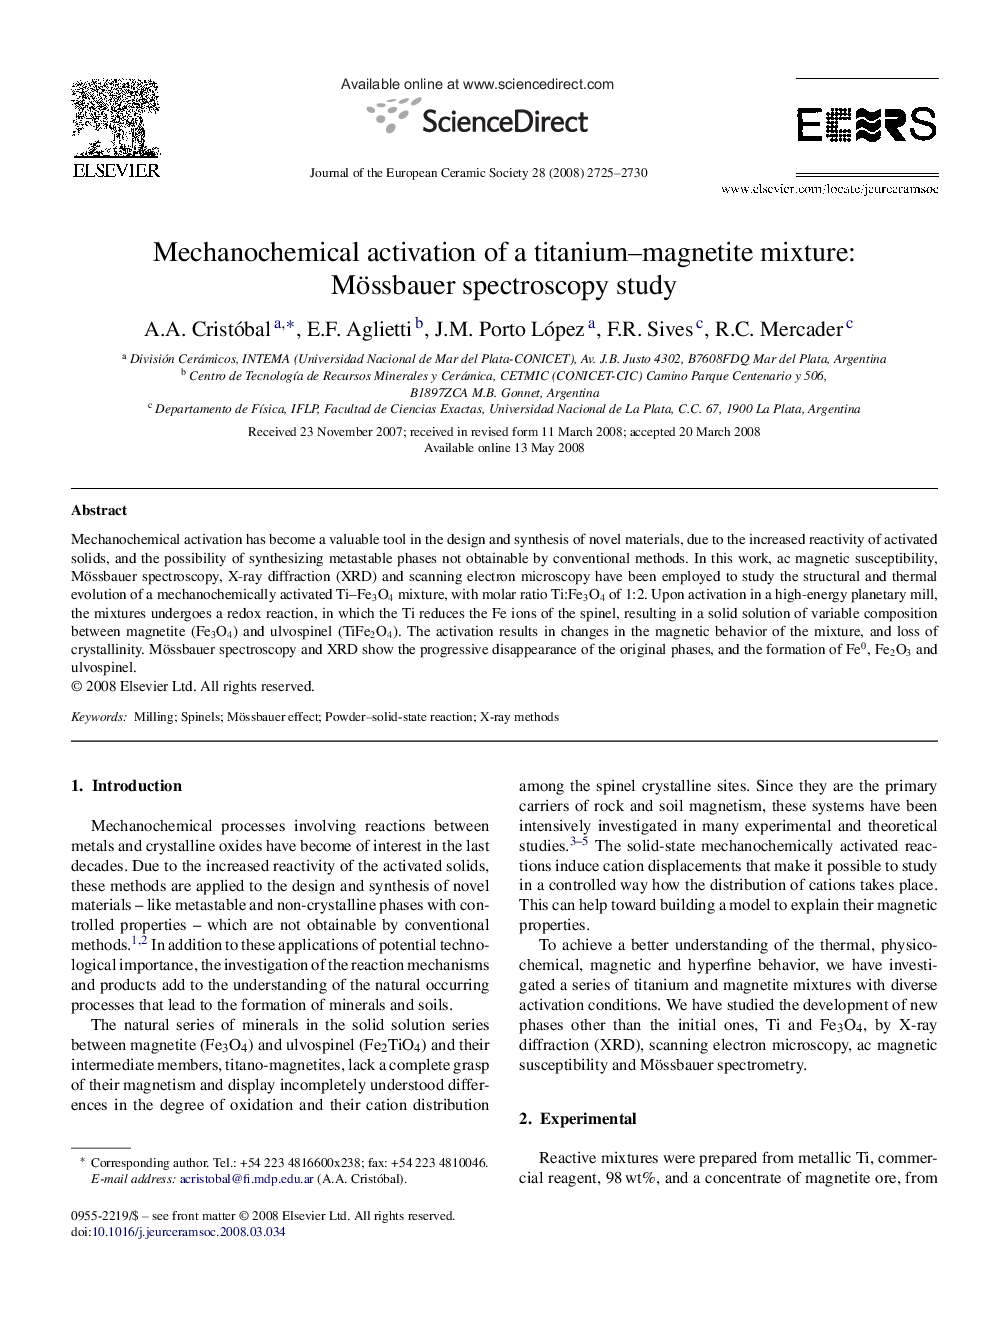 Mechanochemical activation of a titanium-magnetite mixture: Mössbauer spectroscopy study